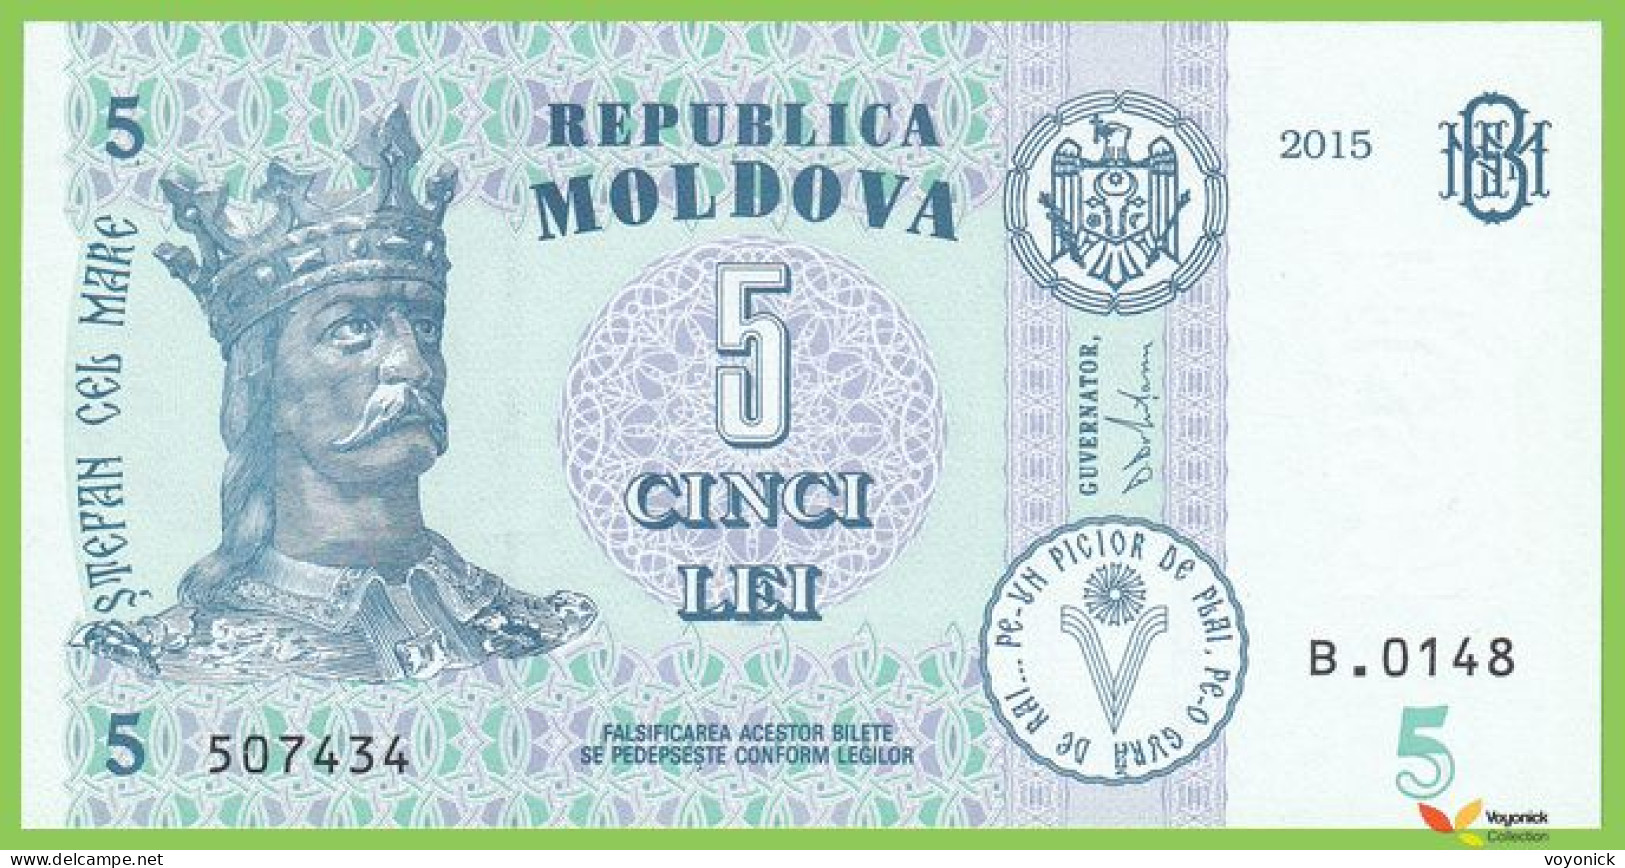 Voyo MOLDOVA 5 Lei 2015(2017) PB22 B117.5 B0130 UNC - Moldova